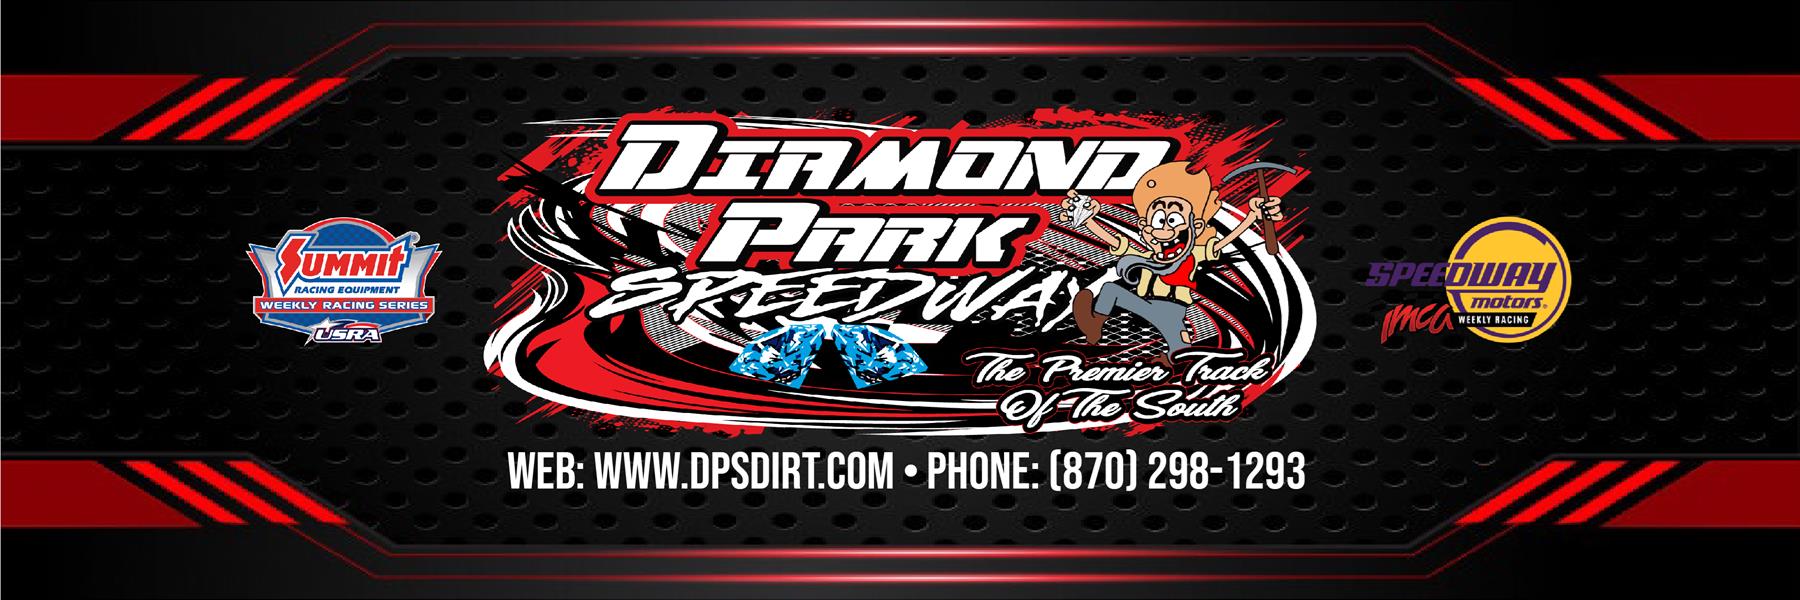 5/6/2016 - Diamond Park Speedway